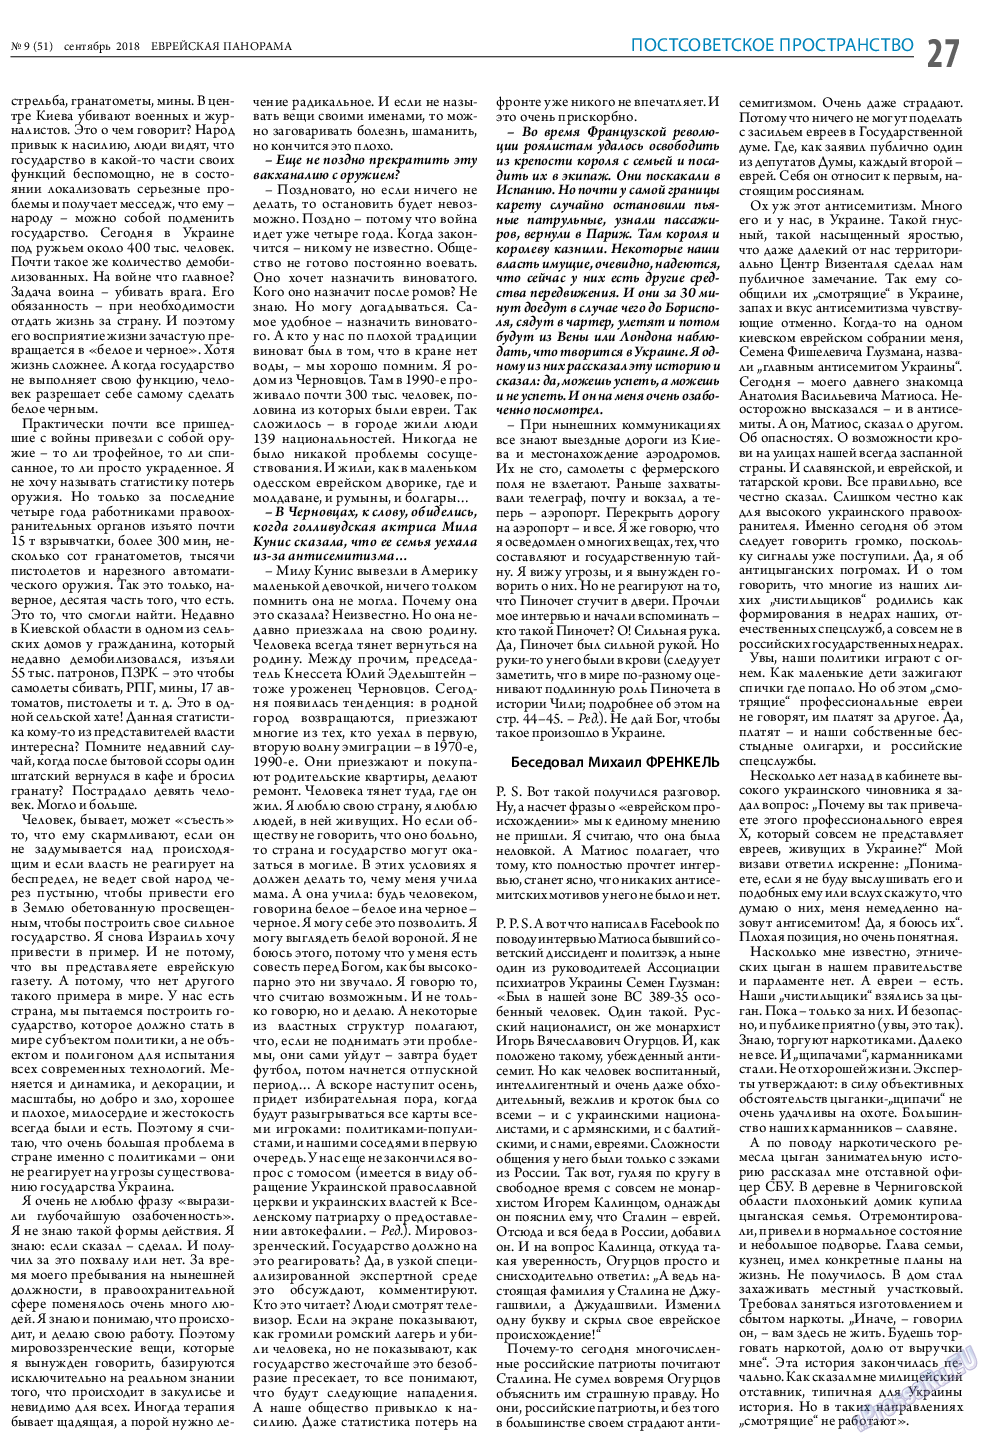 Еврейская панорама, газета. 2018 №9 стр.27